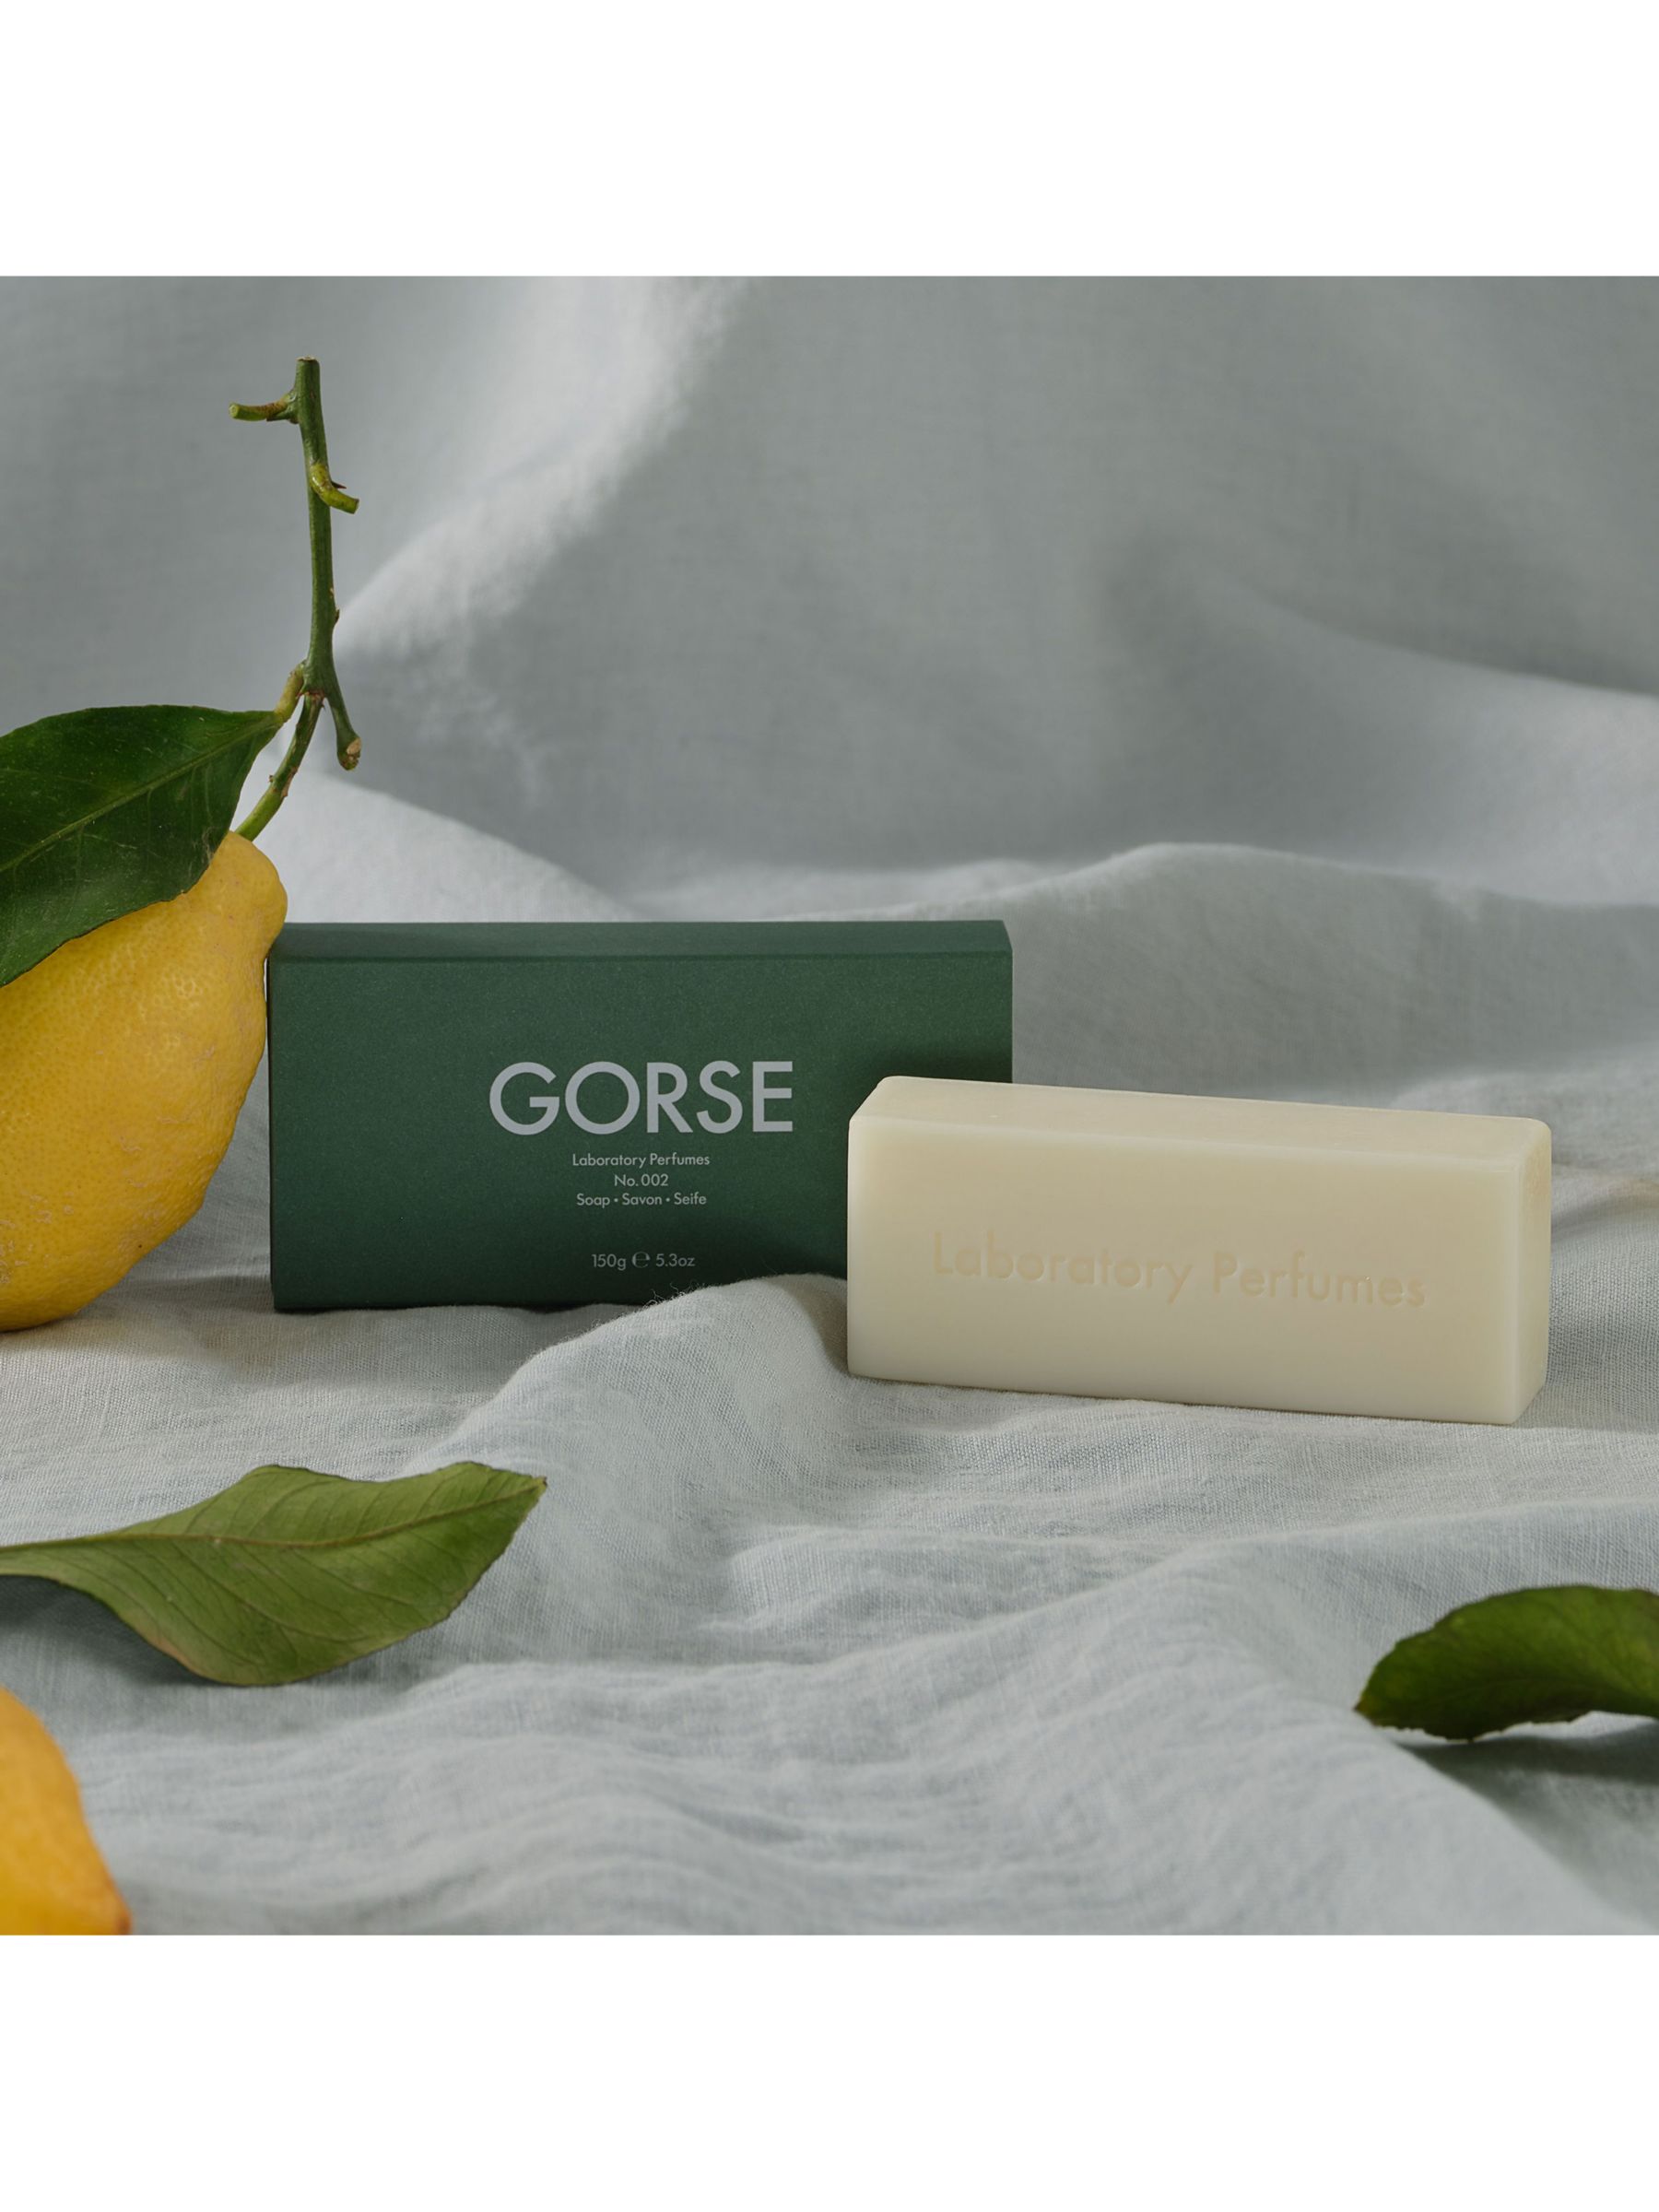 Laboratory Perfumes Gorse Soap, 150g 2